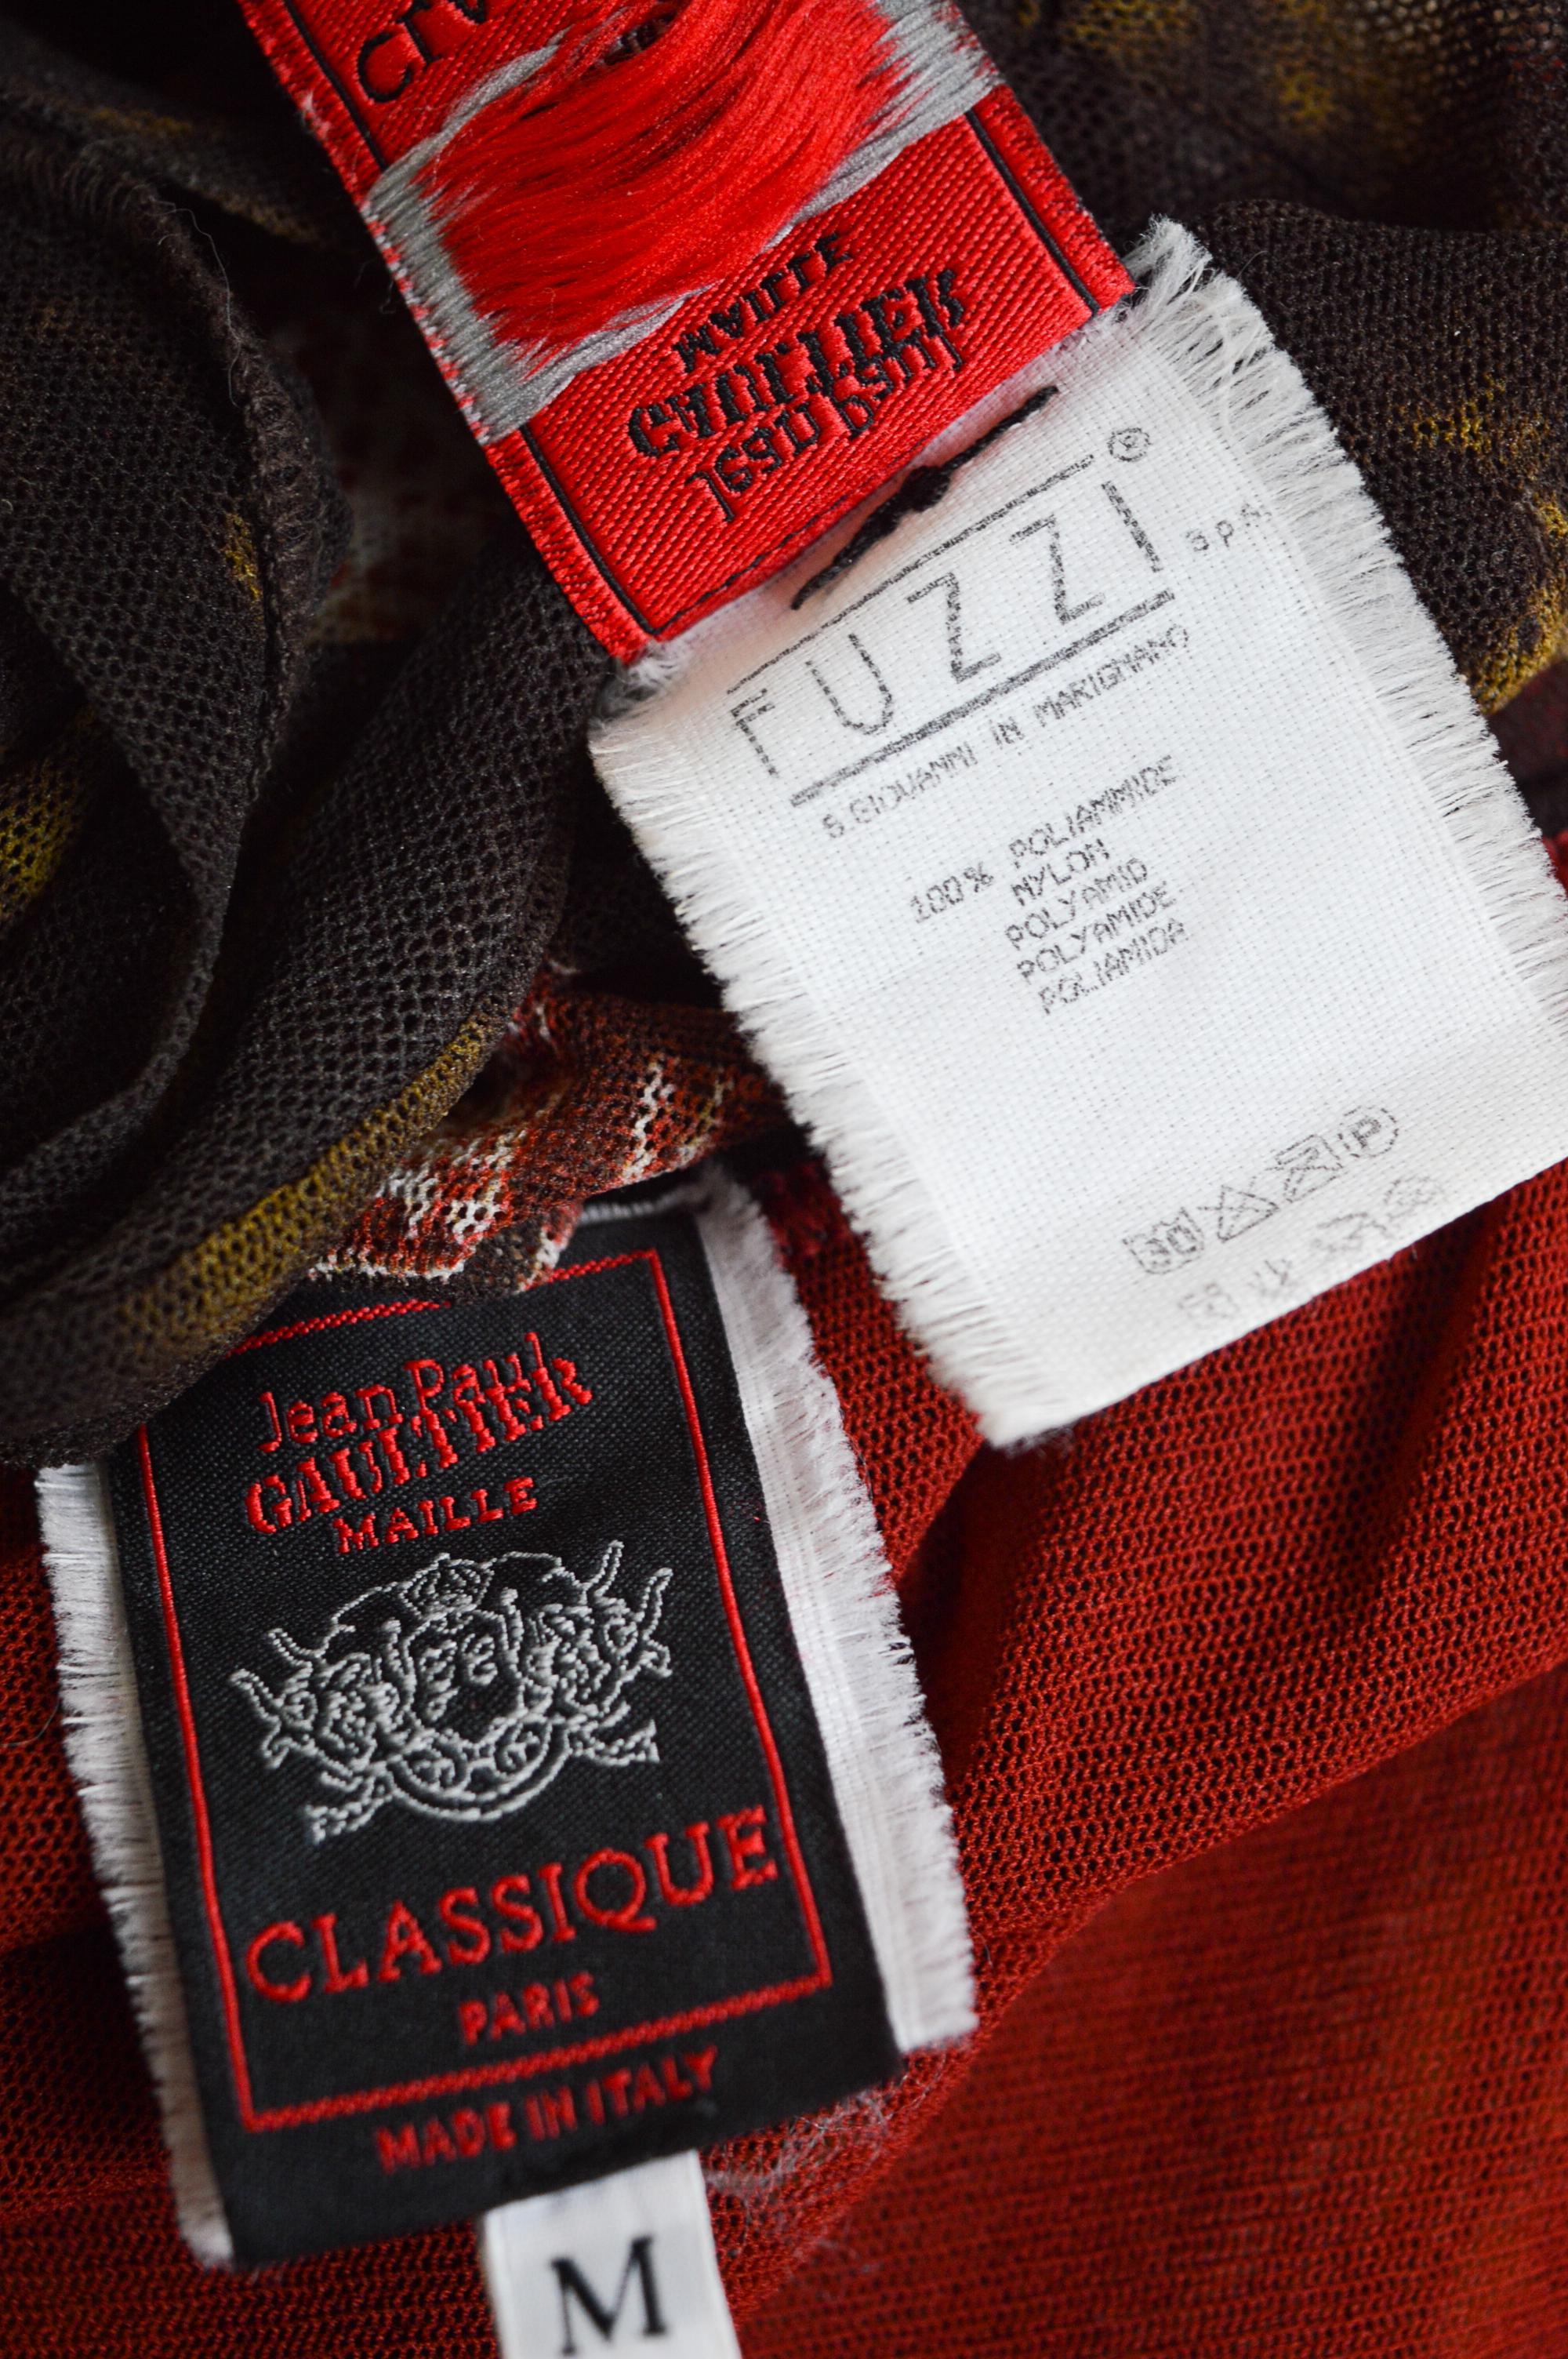 FW 1999 Jean Paul Gaultier Micro Mesh Ensemble Matching Top & Skirt Set For Sale 14